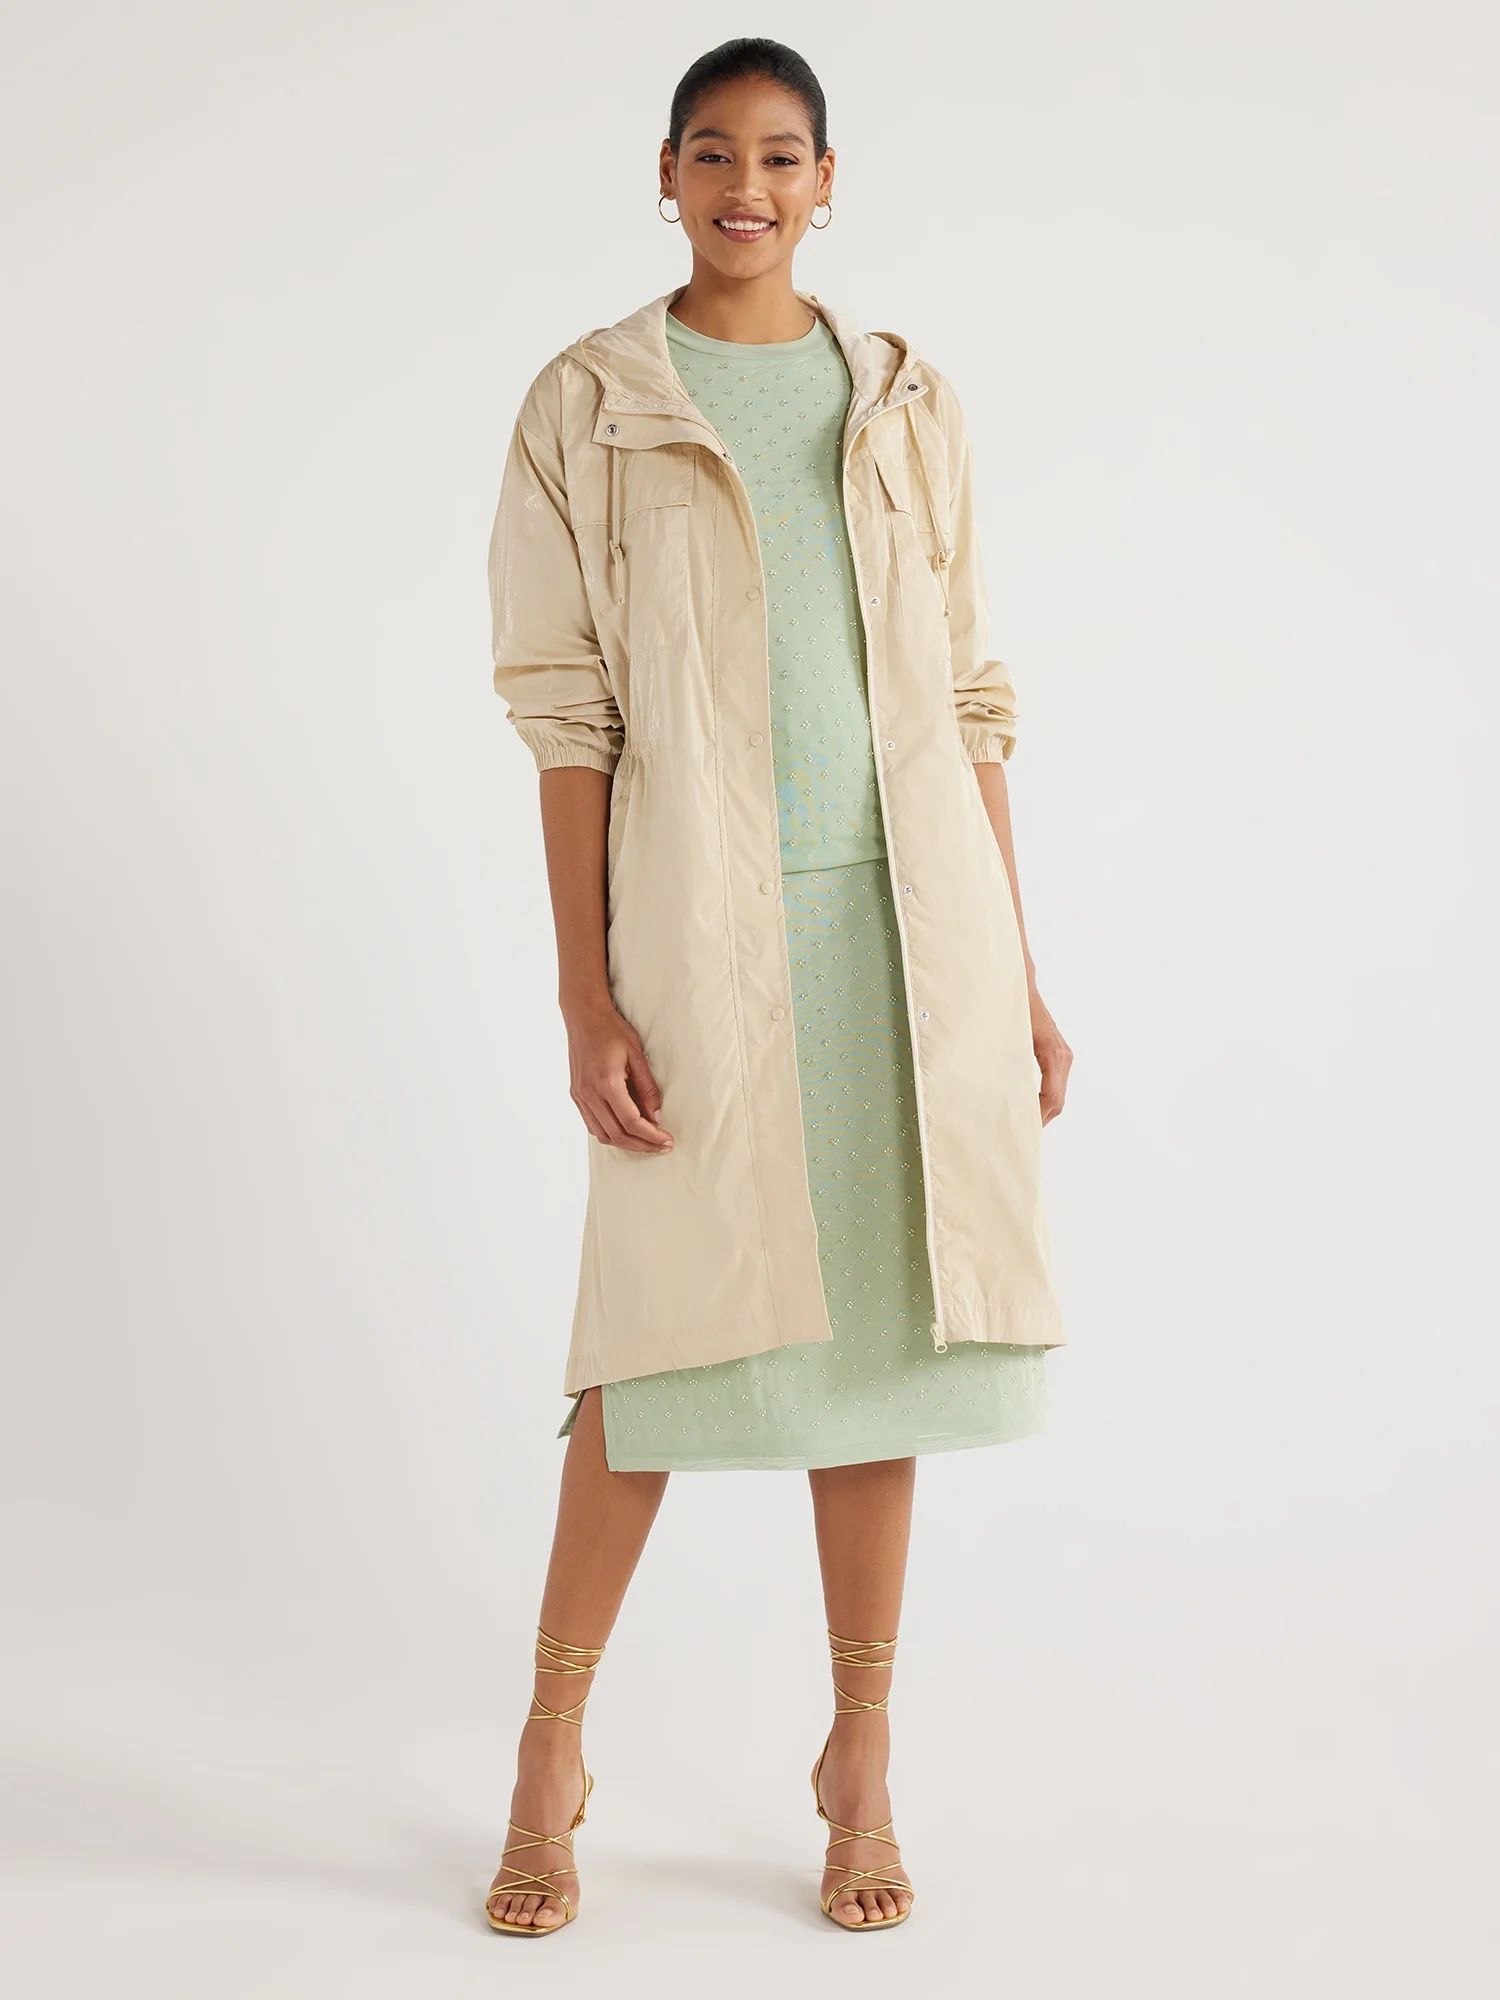 Scoop Women’s Anorak Jacket, Sizes XS-XXL | Walmart (US)